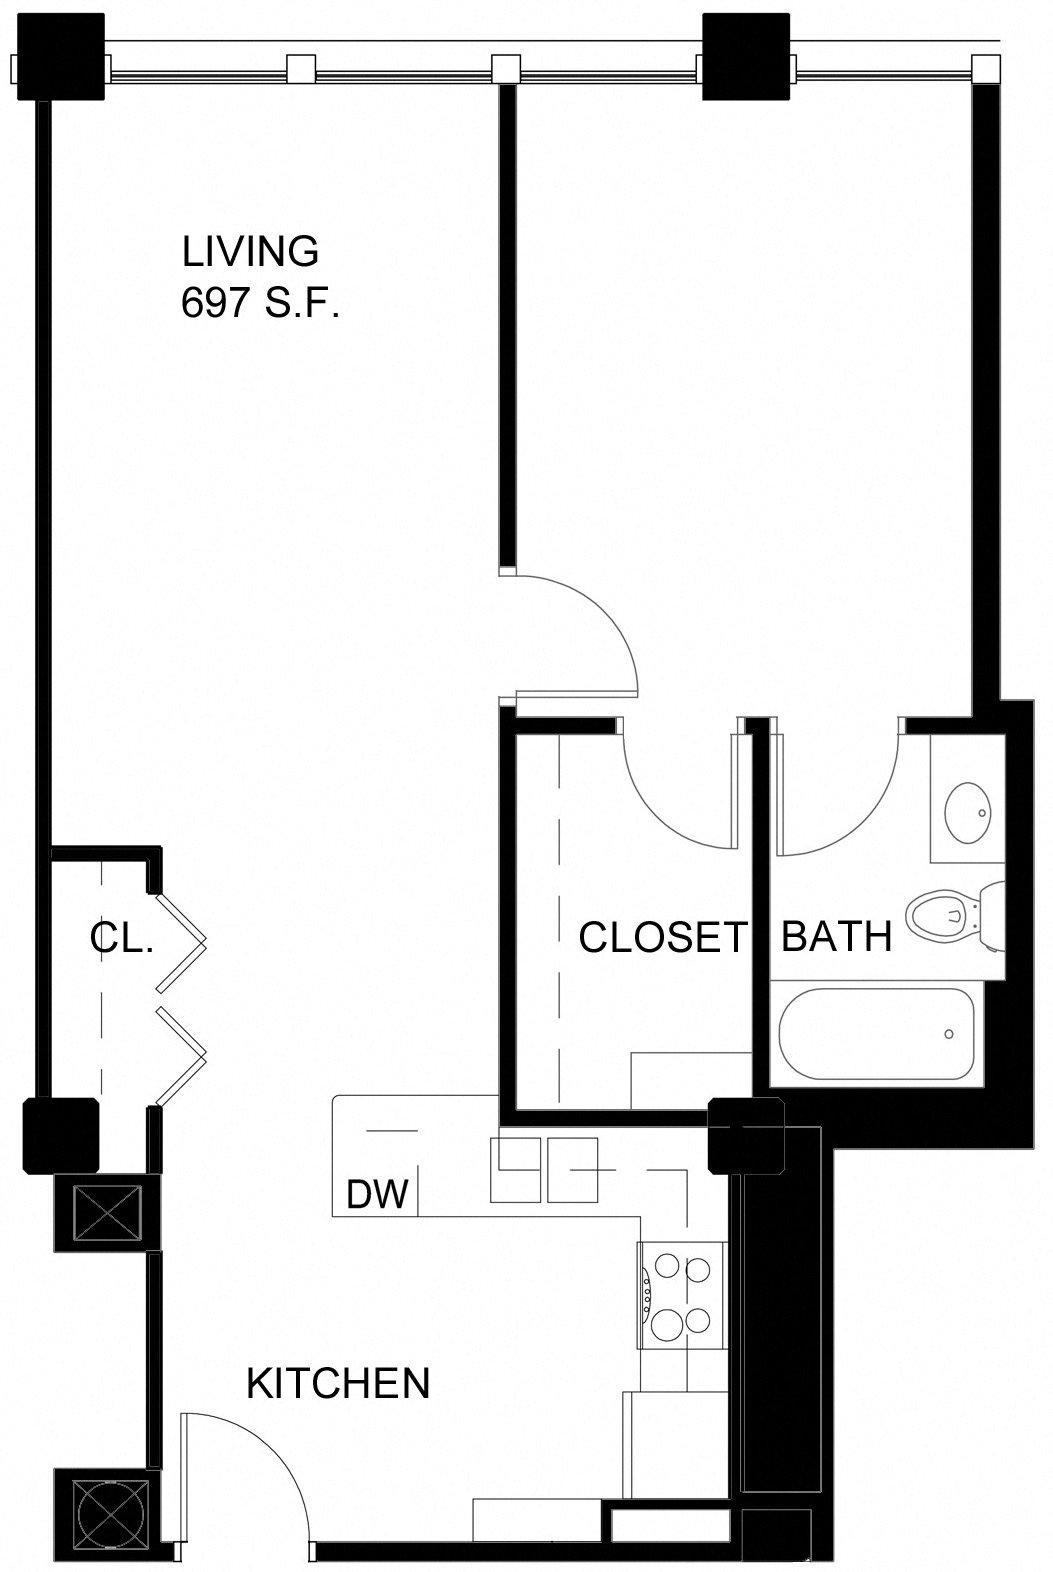 Floorplan for Apartment #P425B, 1 bedroom unit at Halstead Providence